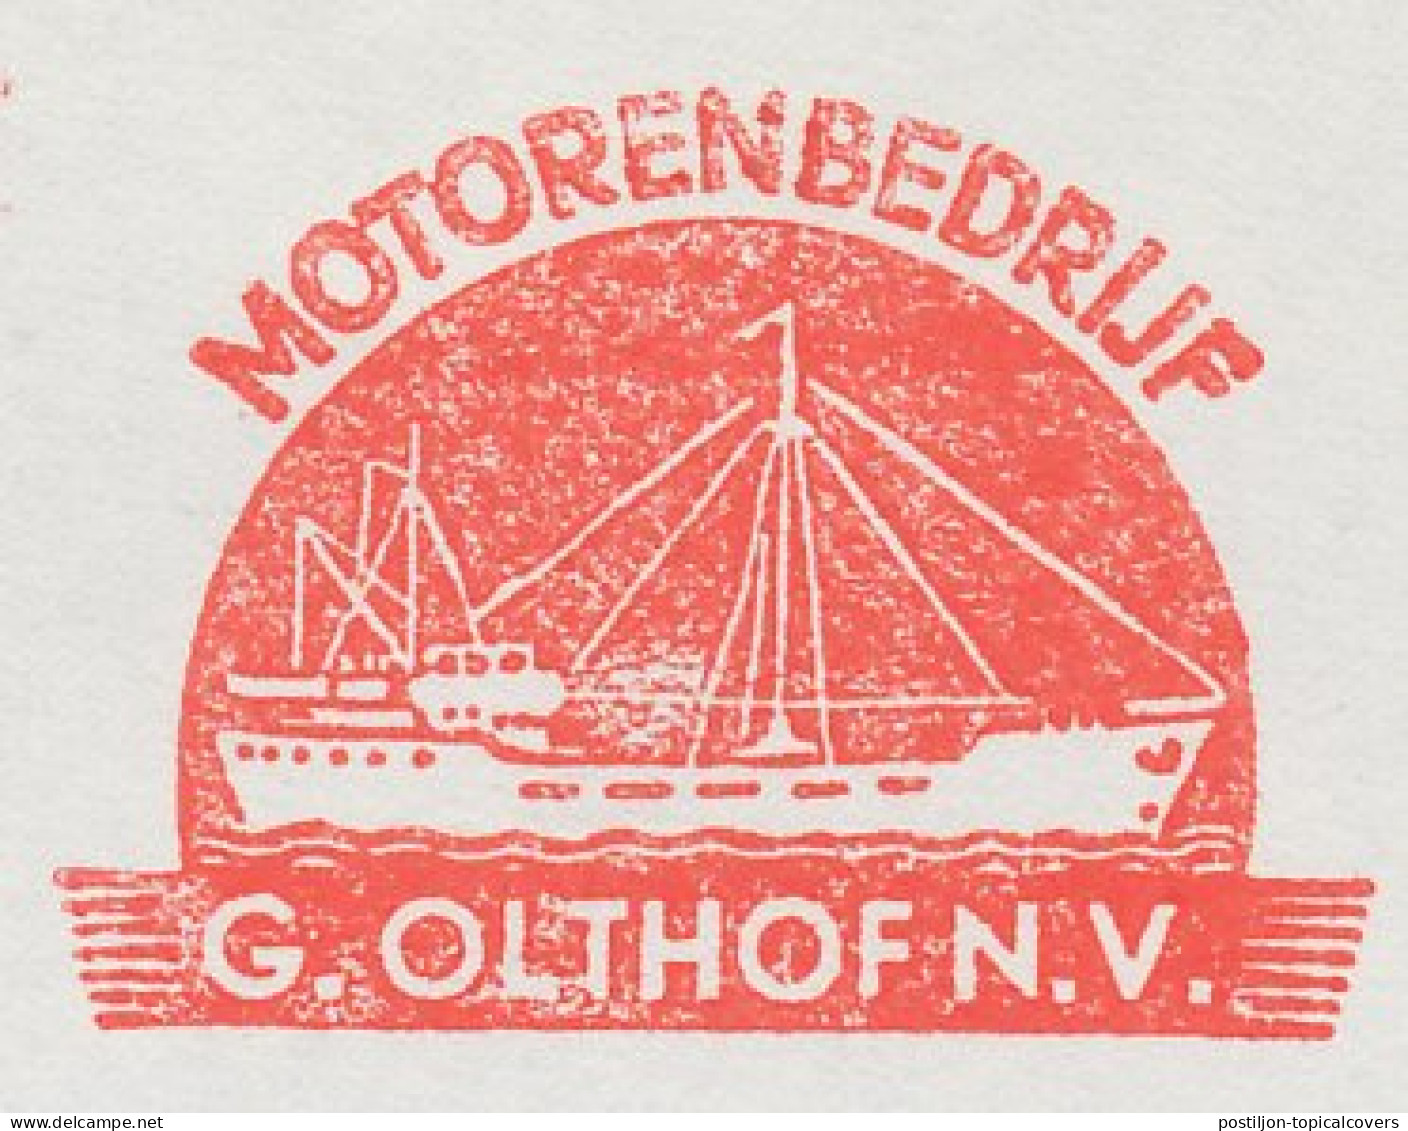 Meter Cut Netherlands 1972 Cargo Ship - Ships